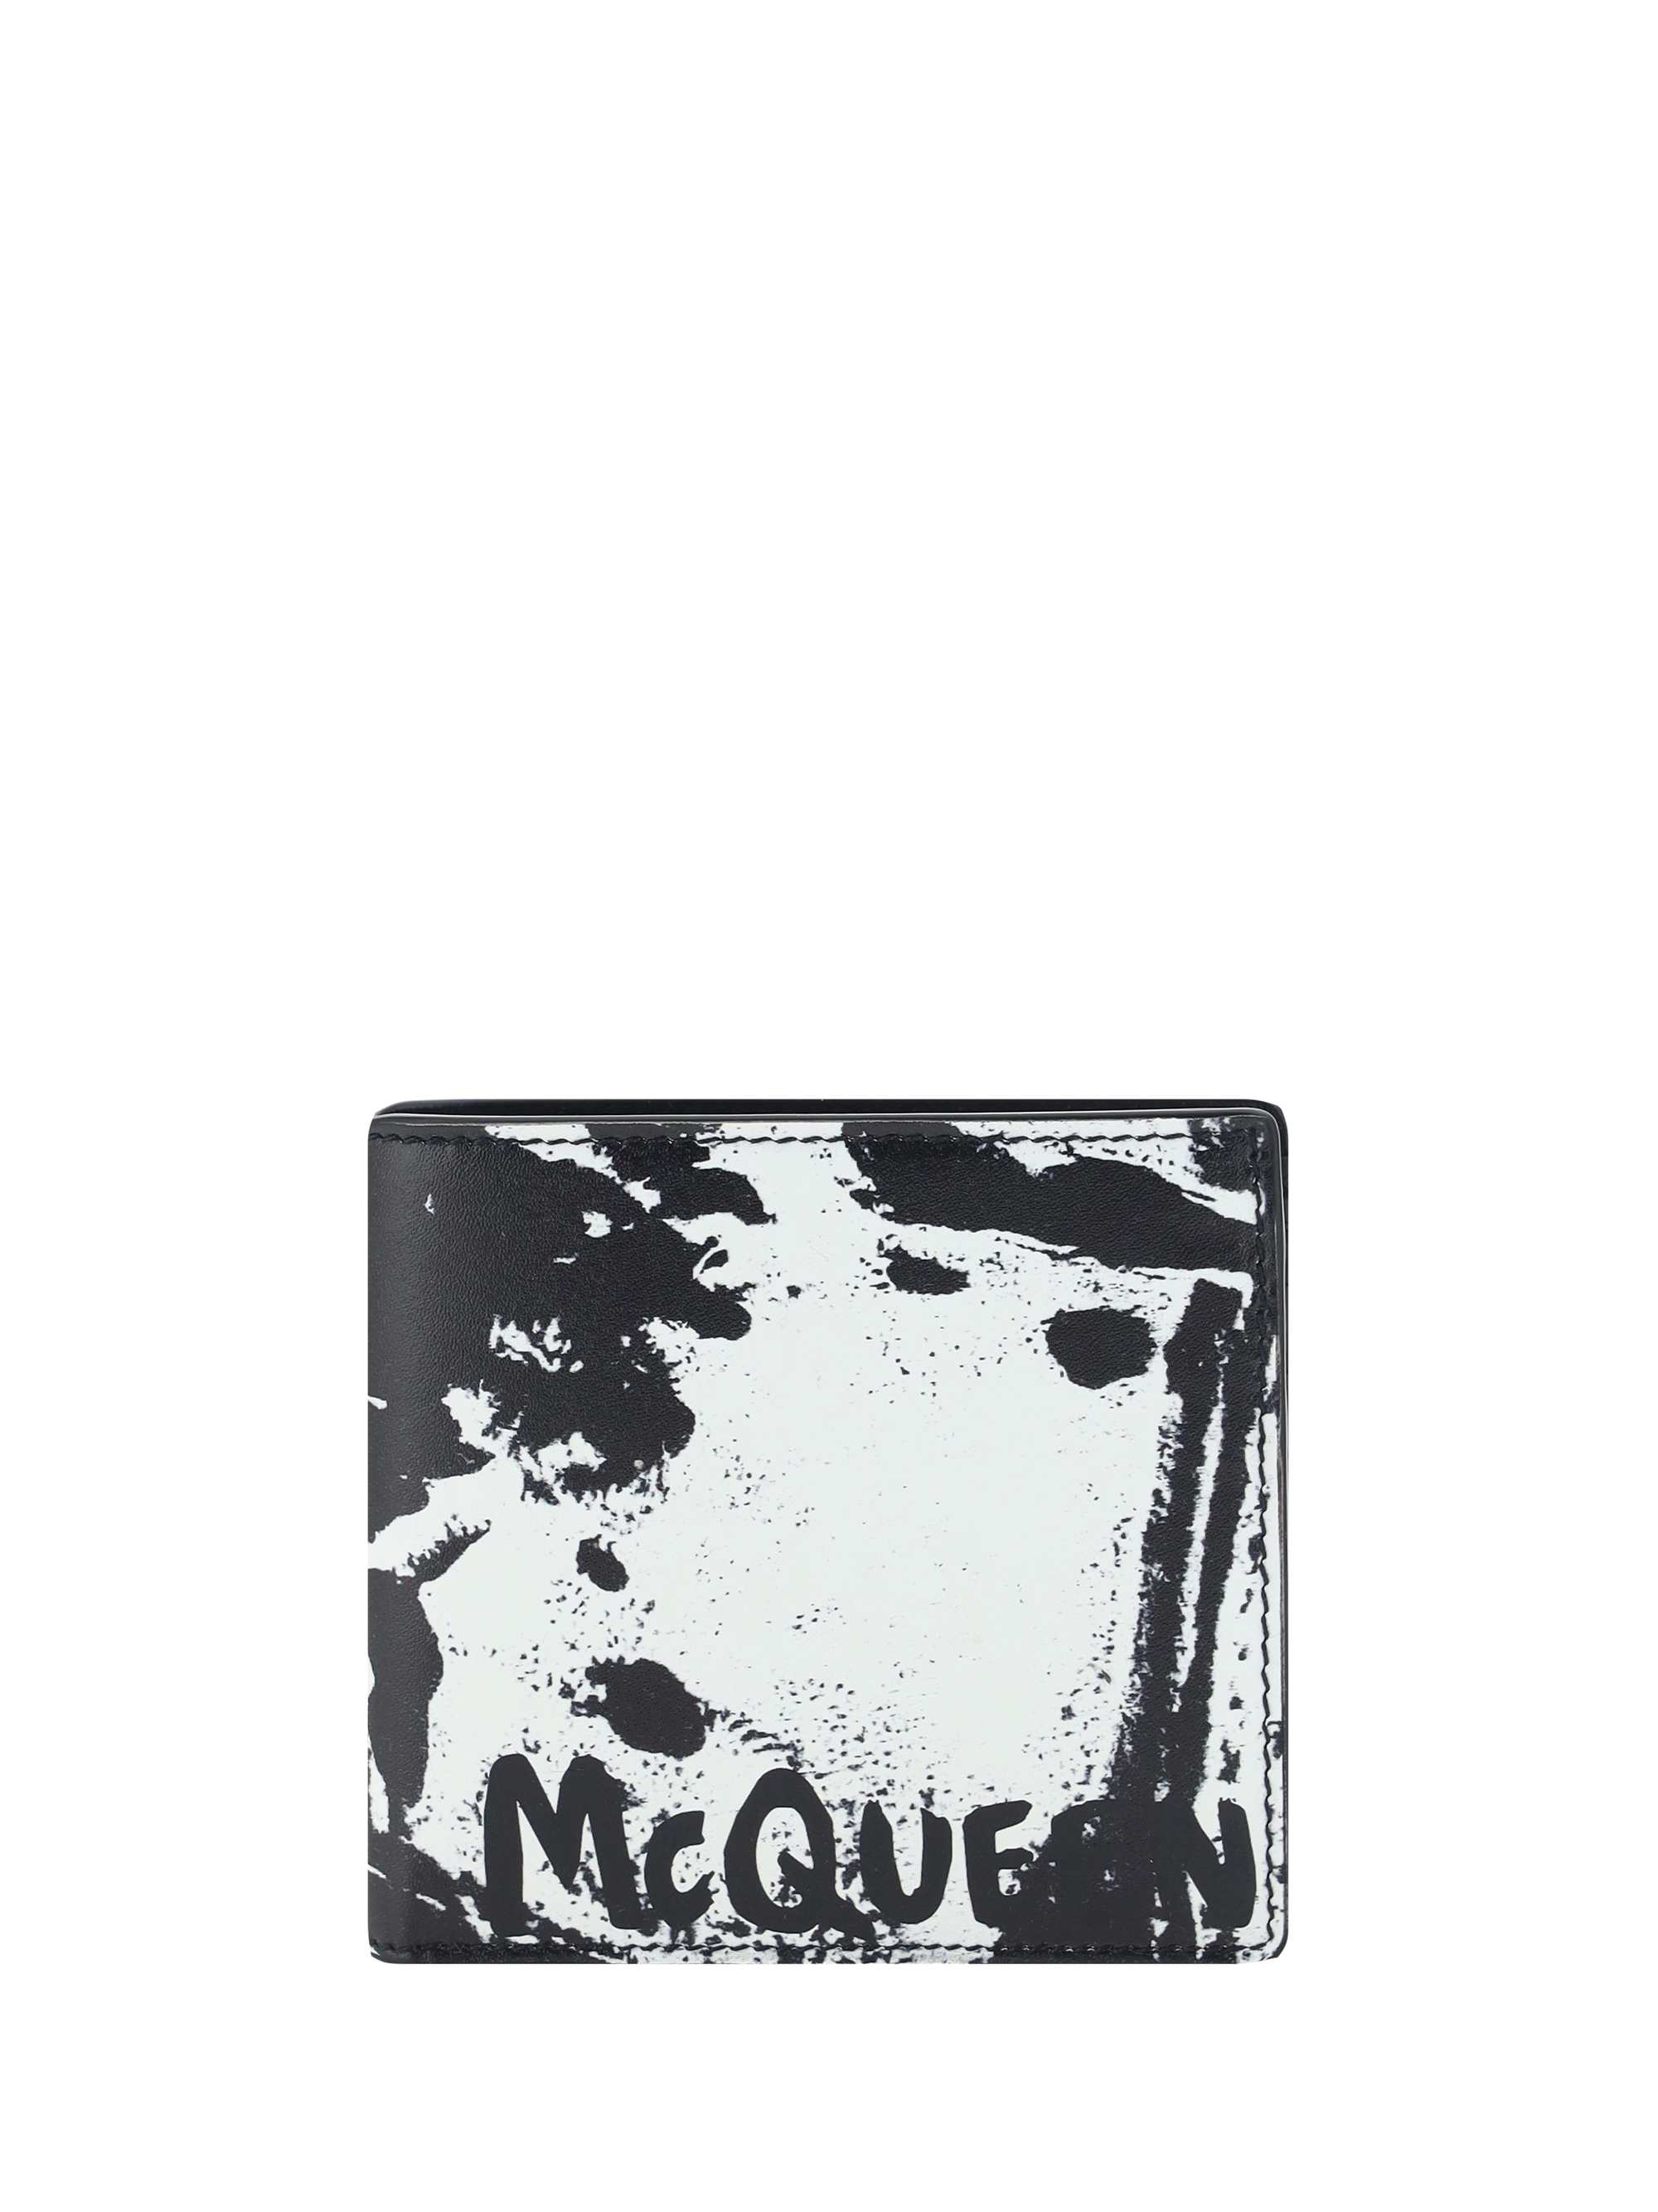 Alexander Mcqueen Wallet In Black/white